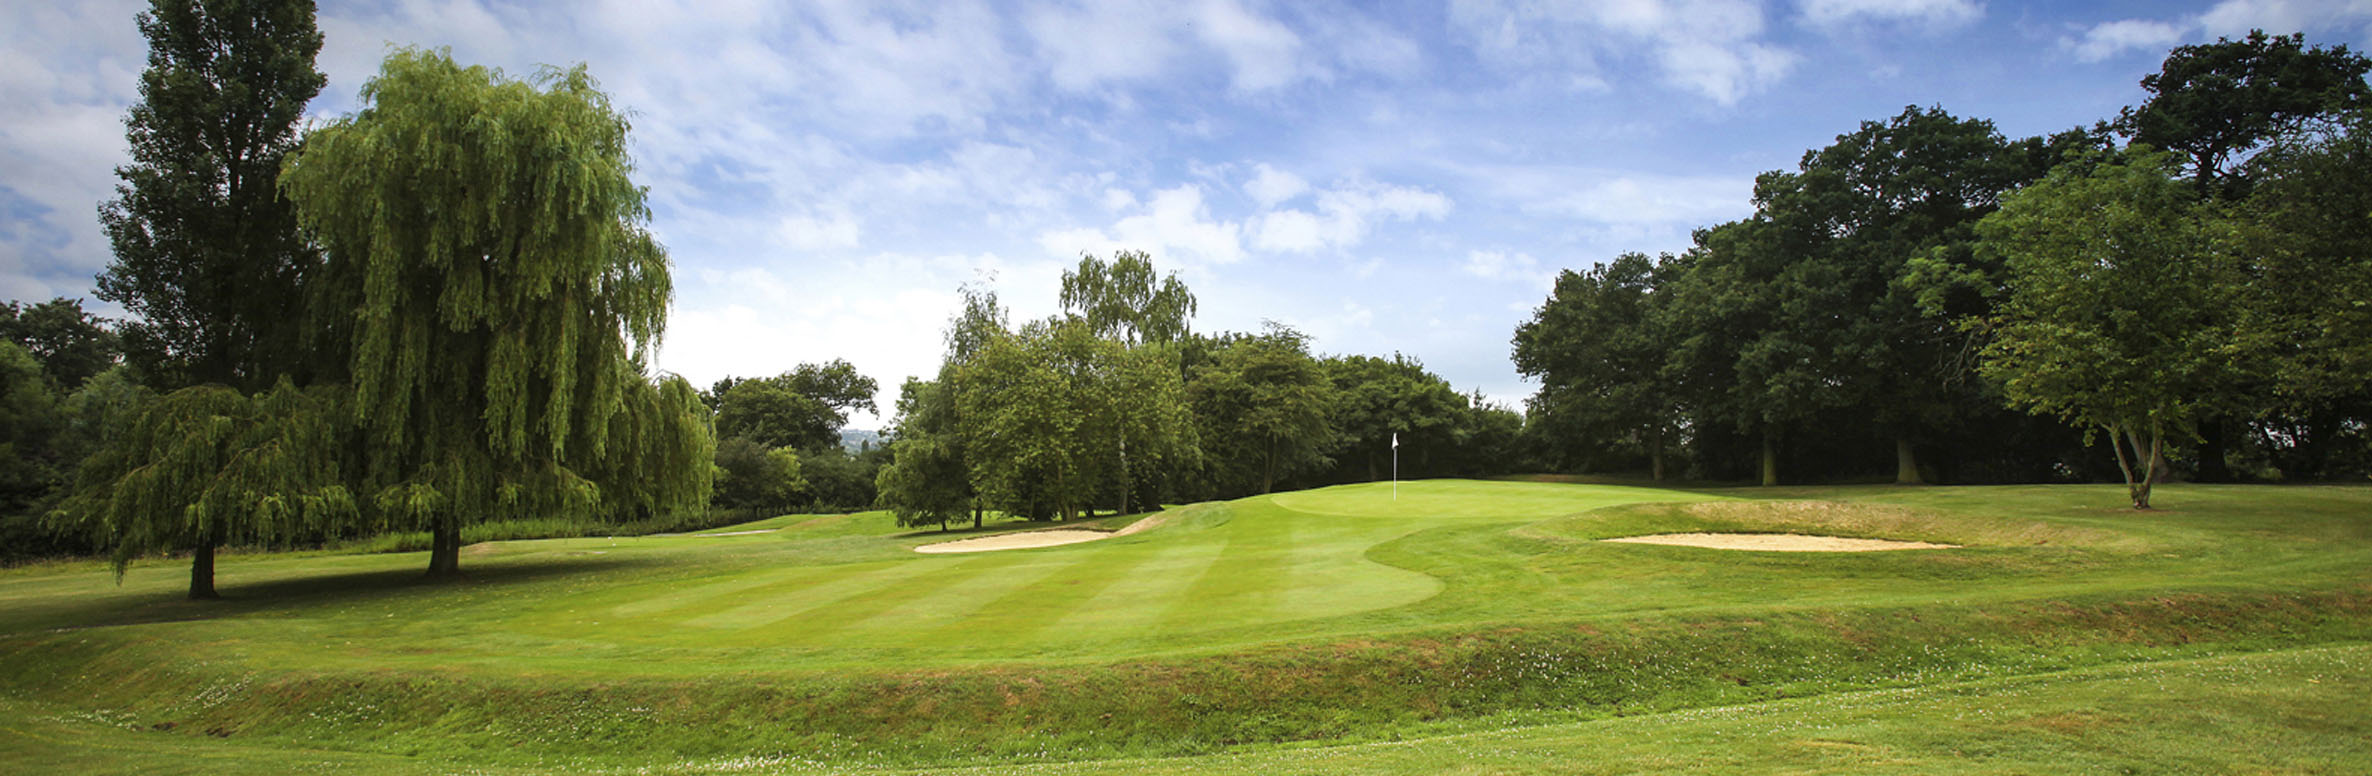 Golf Course Image - Abridge Golf Club No. 7